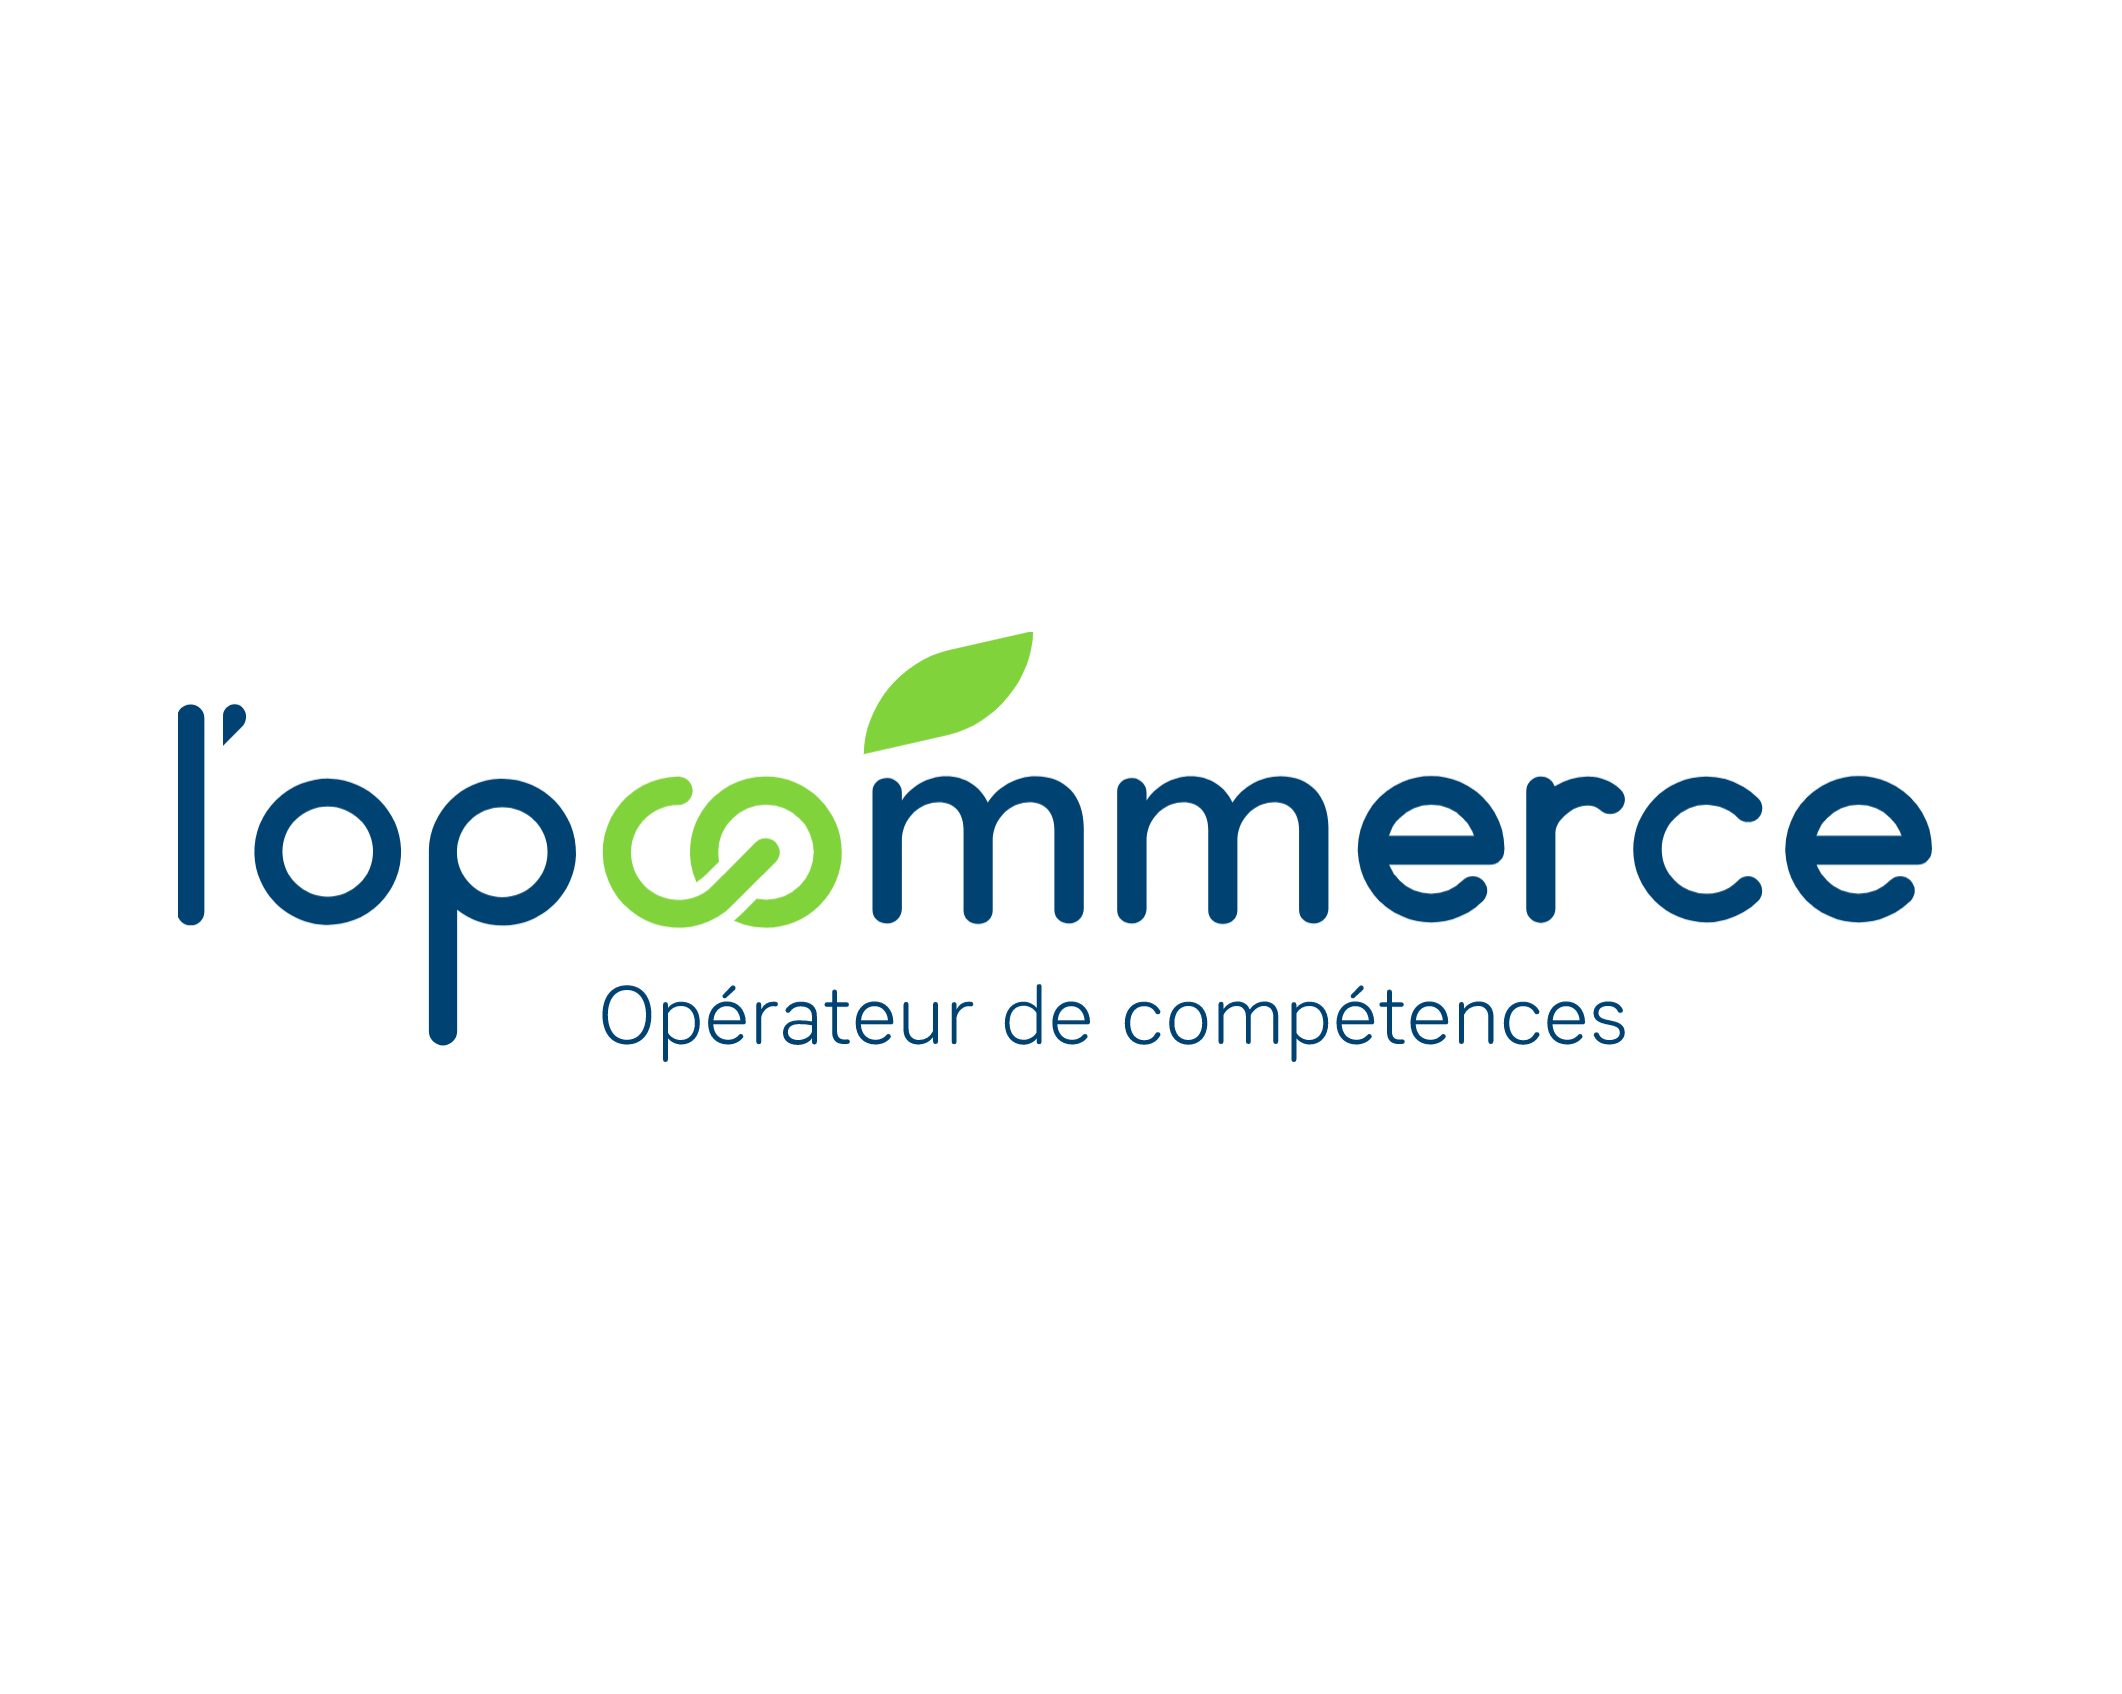 OPCO Commerce